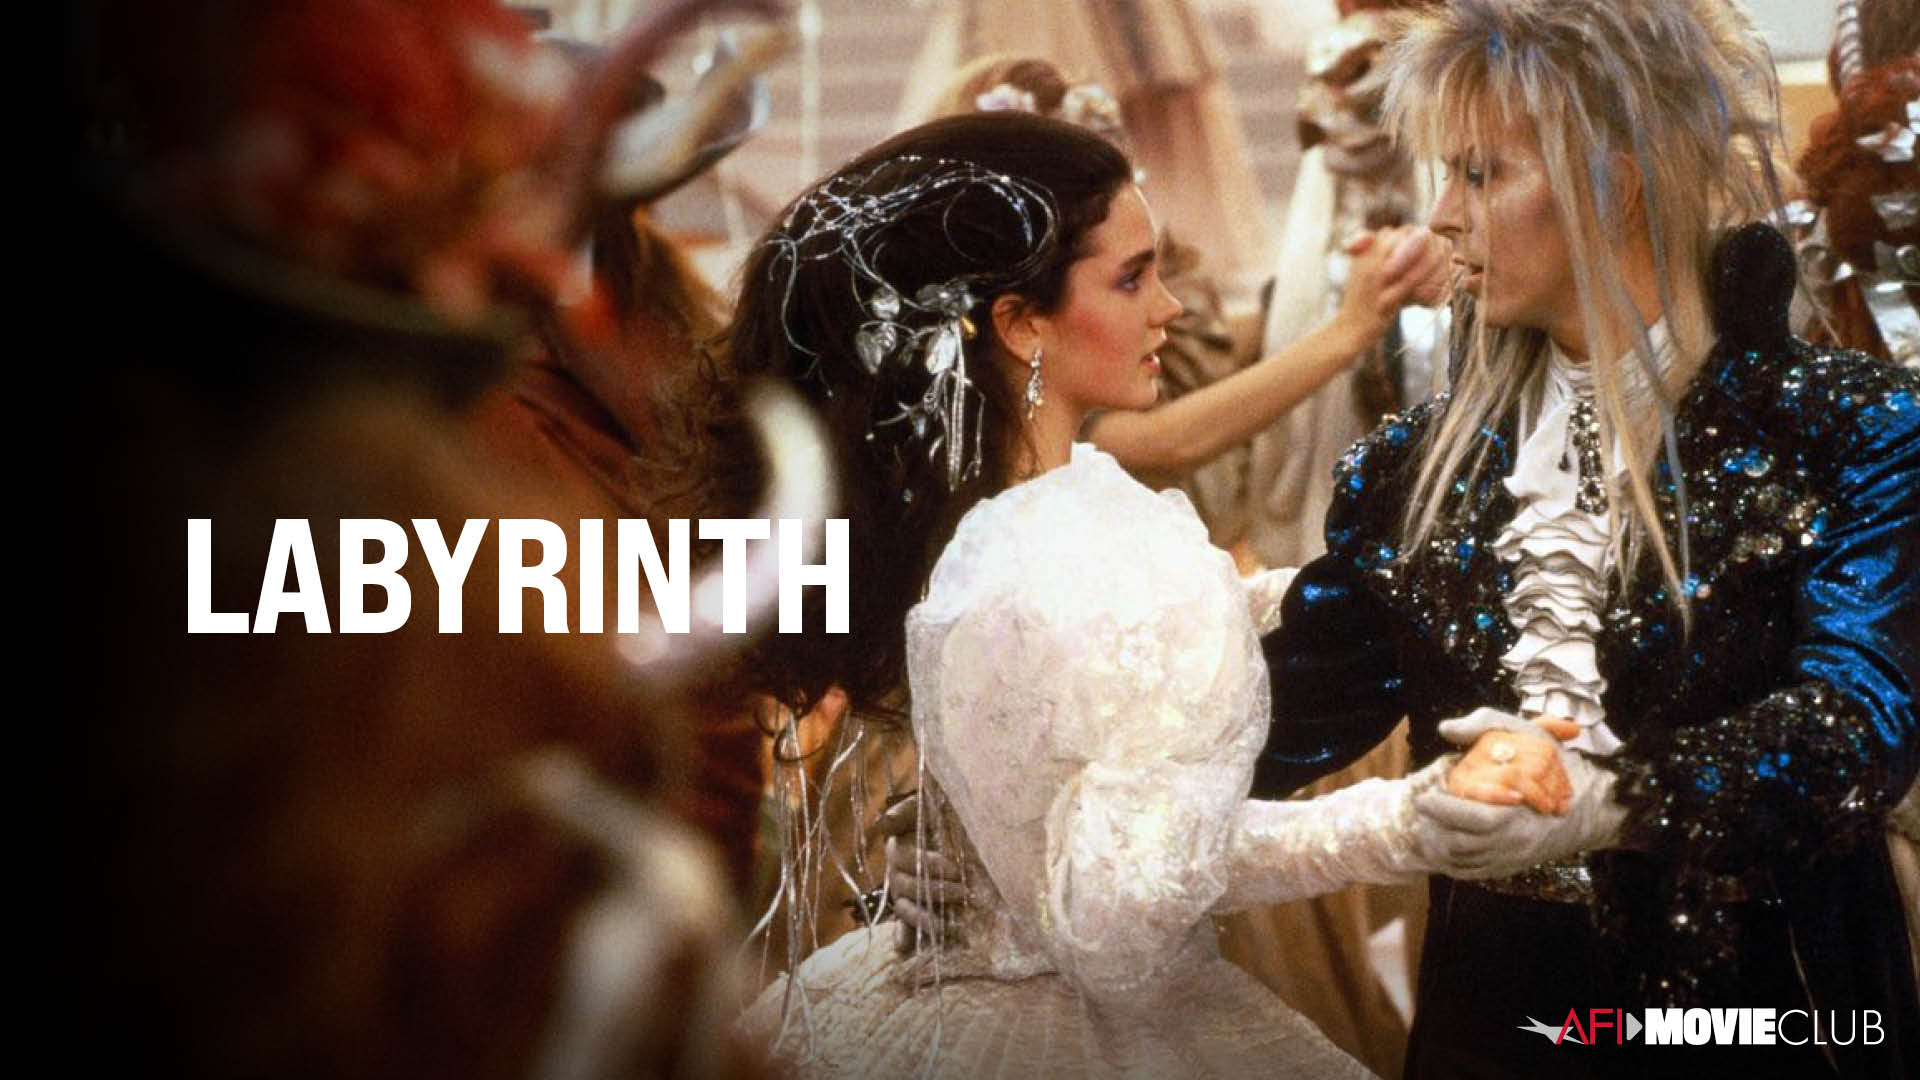 Labyrinth Film Still - Jennifer Connelly and David Bowie